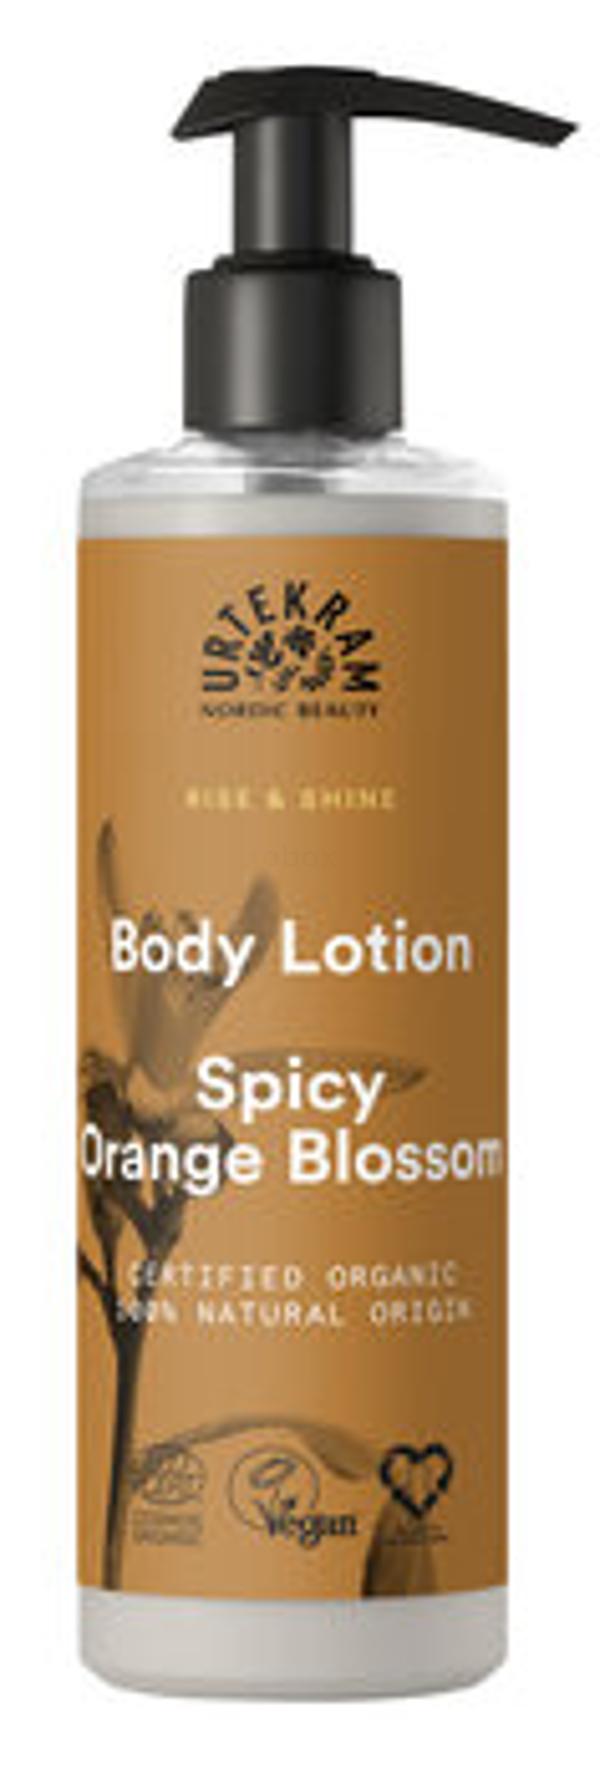 Produktfoto zu Spicy Orange Blossom Body